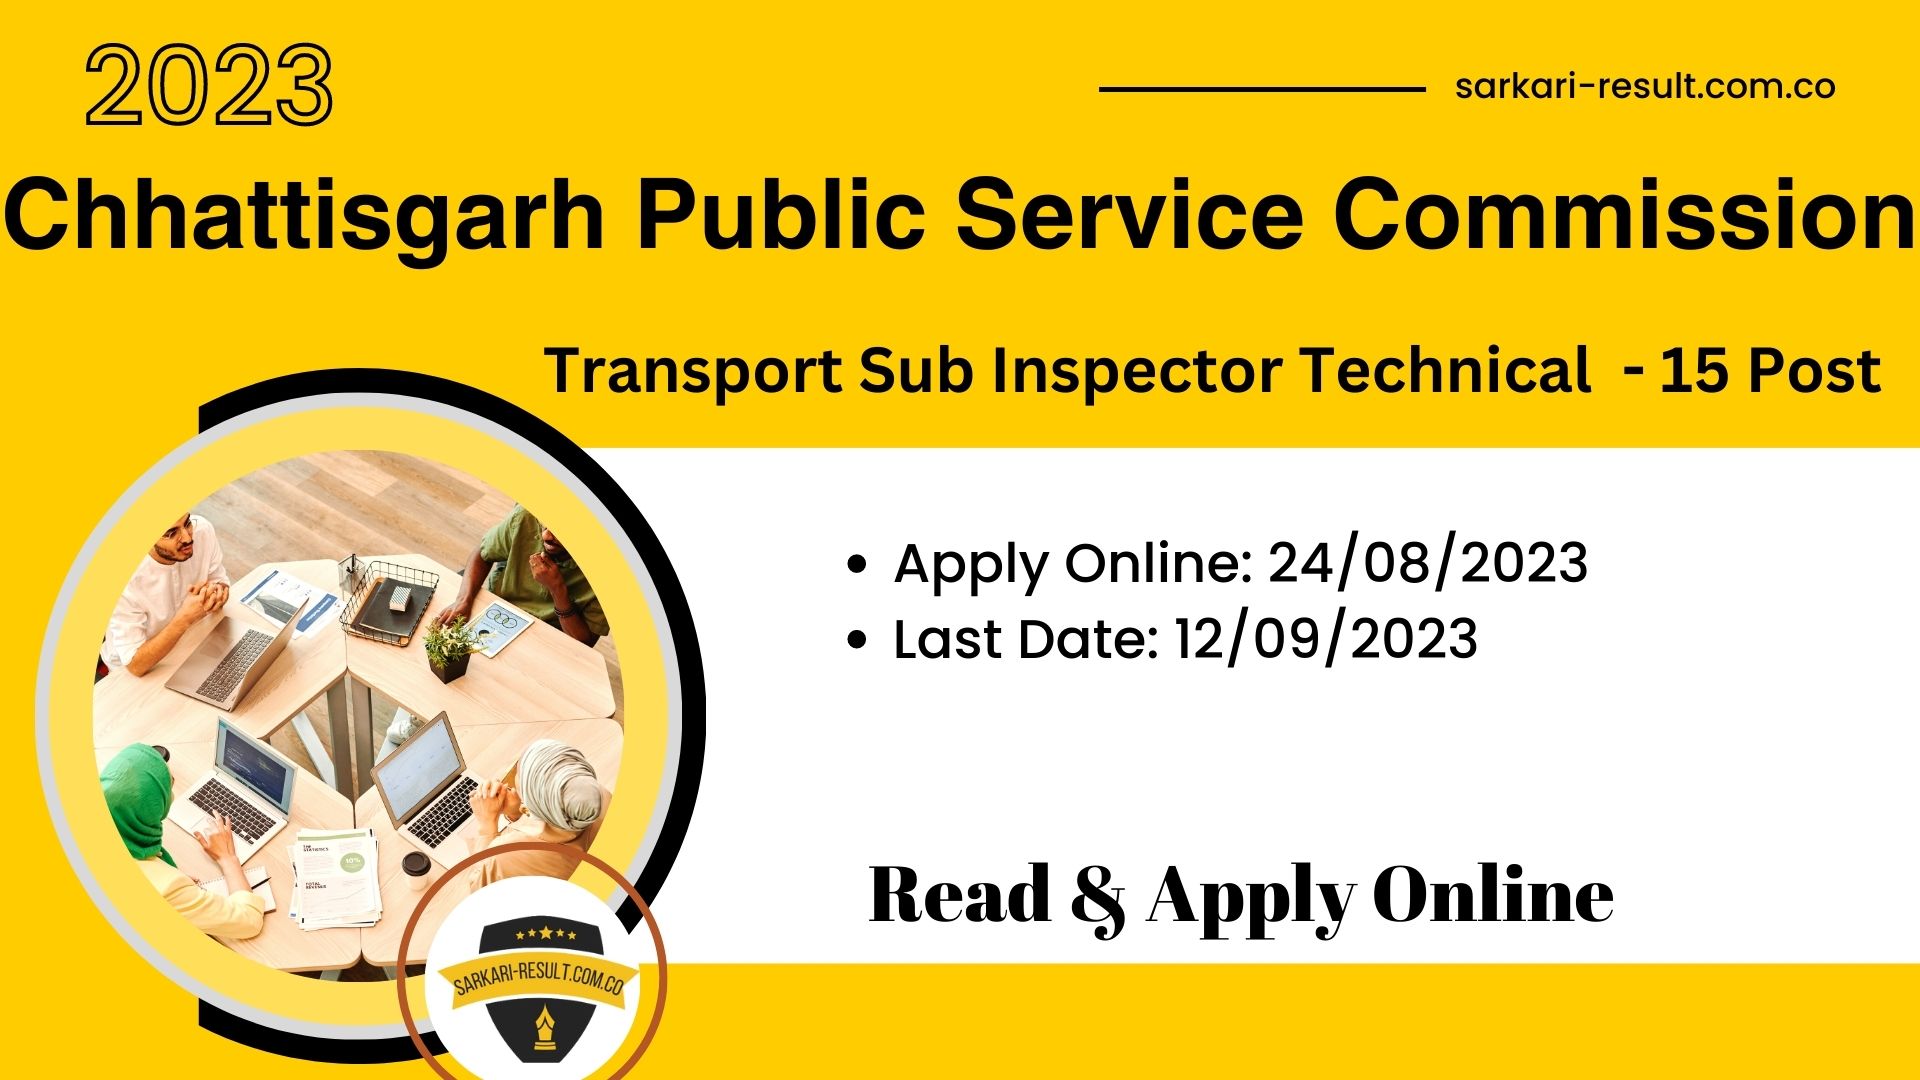 Apply Online CGPSC Chhattisgarh Transport Sub Inspector Technical Recruitment 2023 for 15 Post